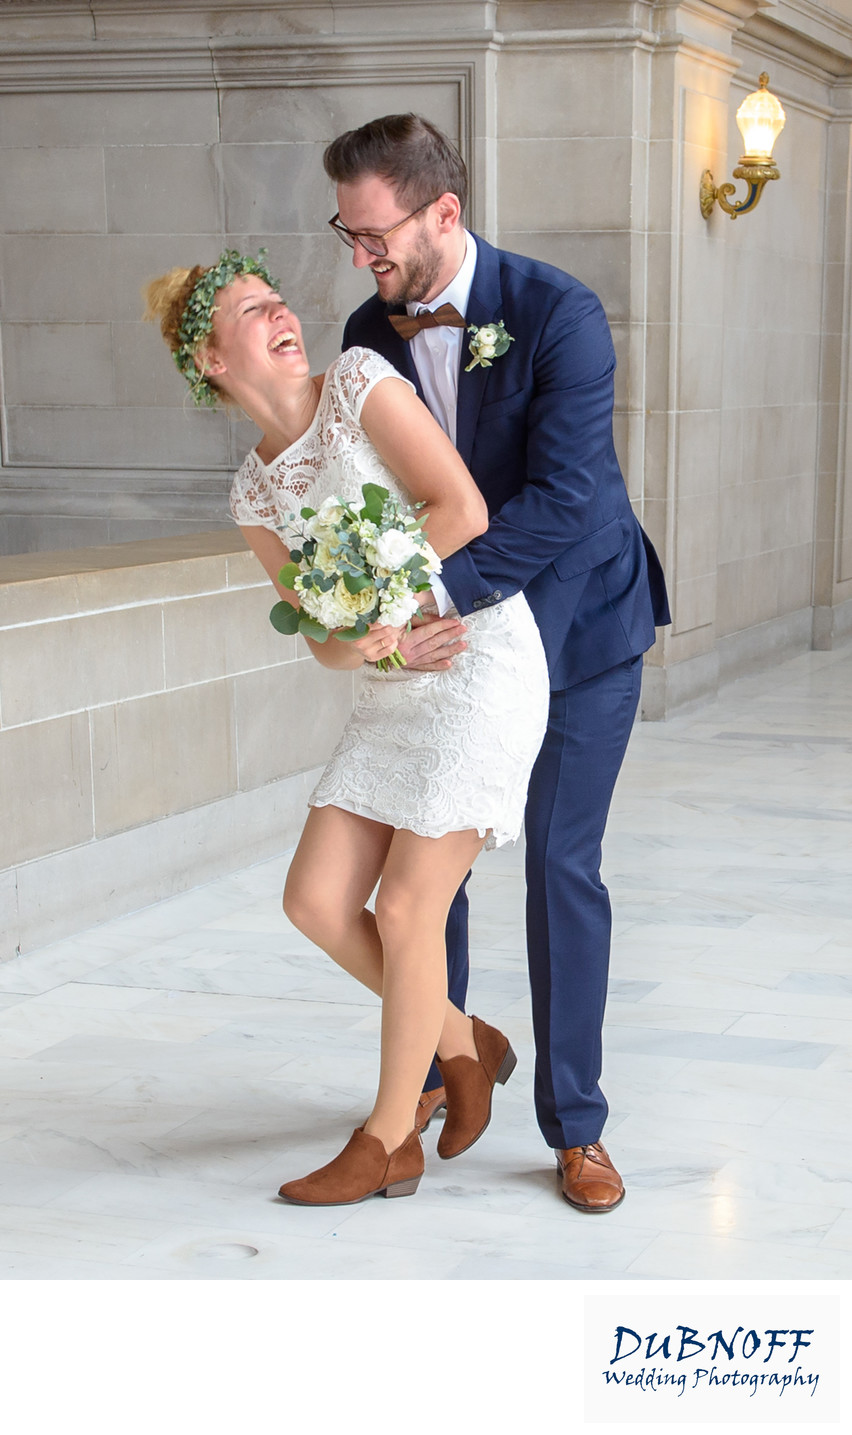 Fun and Candid Wedding Photography at San Francisco City Hall